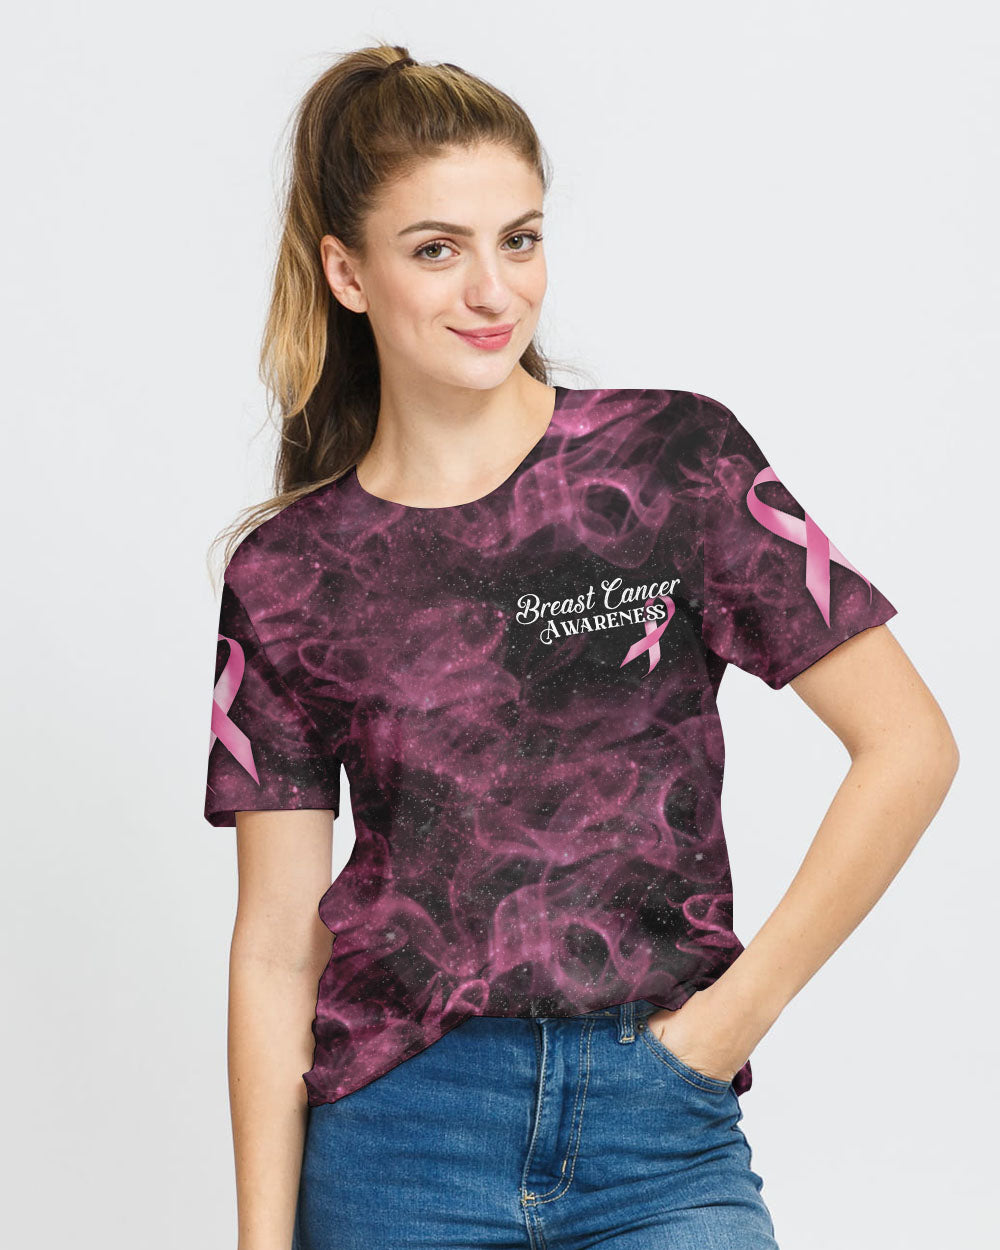 Rose Dragon Women's Breast Cancer Awareness Tshirt